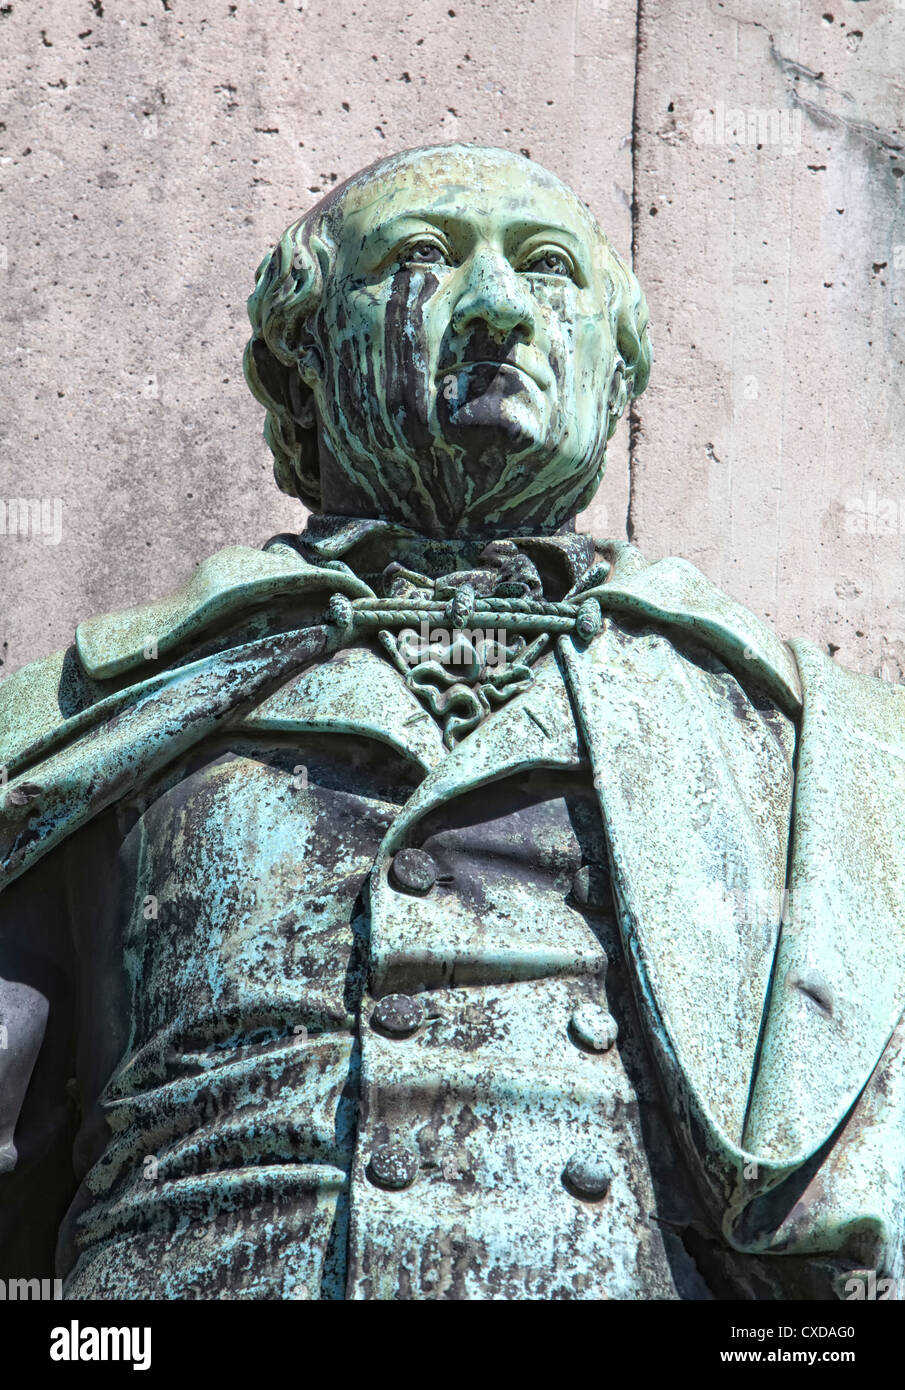 Statua di Karl Sigmund Franz Freiherr vom Stein zum Altenstein, 1770-1840, uomo politico prussiano, Colonia, Germania, Europa Foto Stock